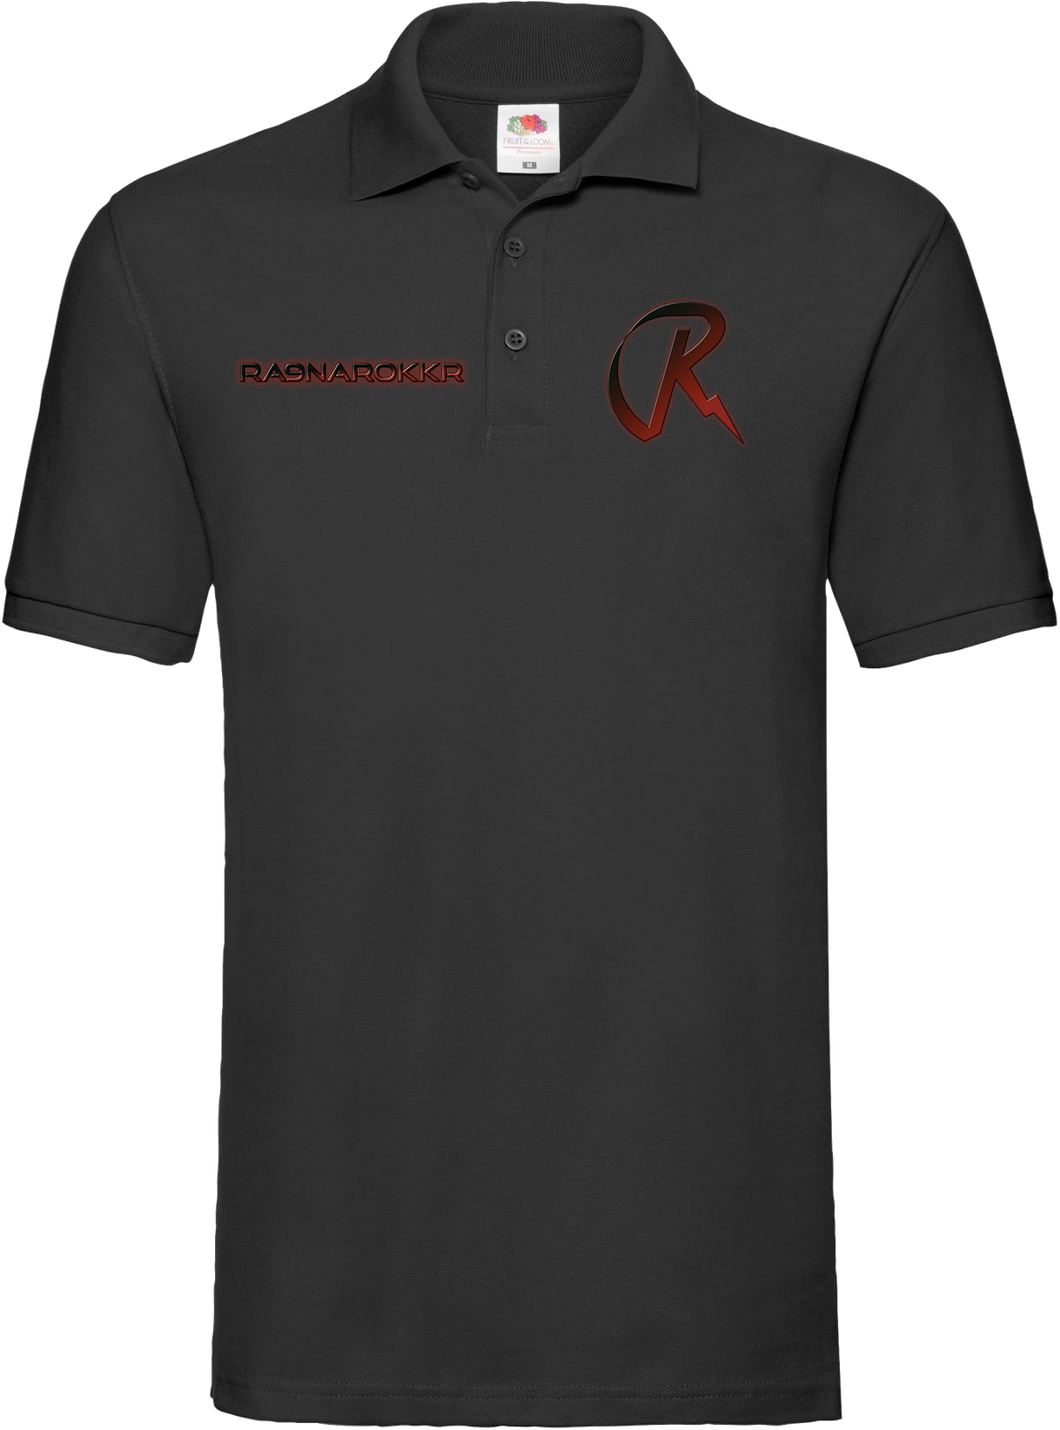 Ra9narokkr Polo Shirt schwarz mit Wunschname